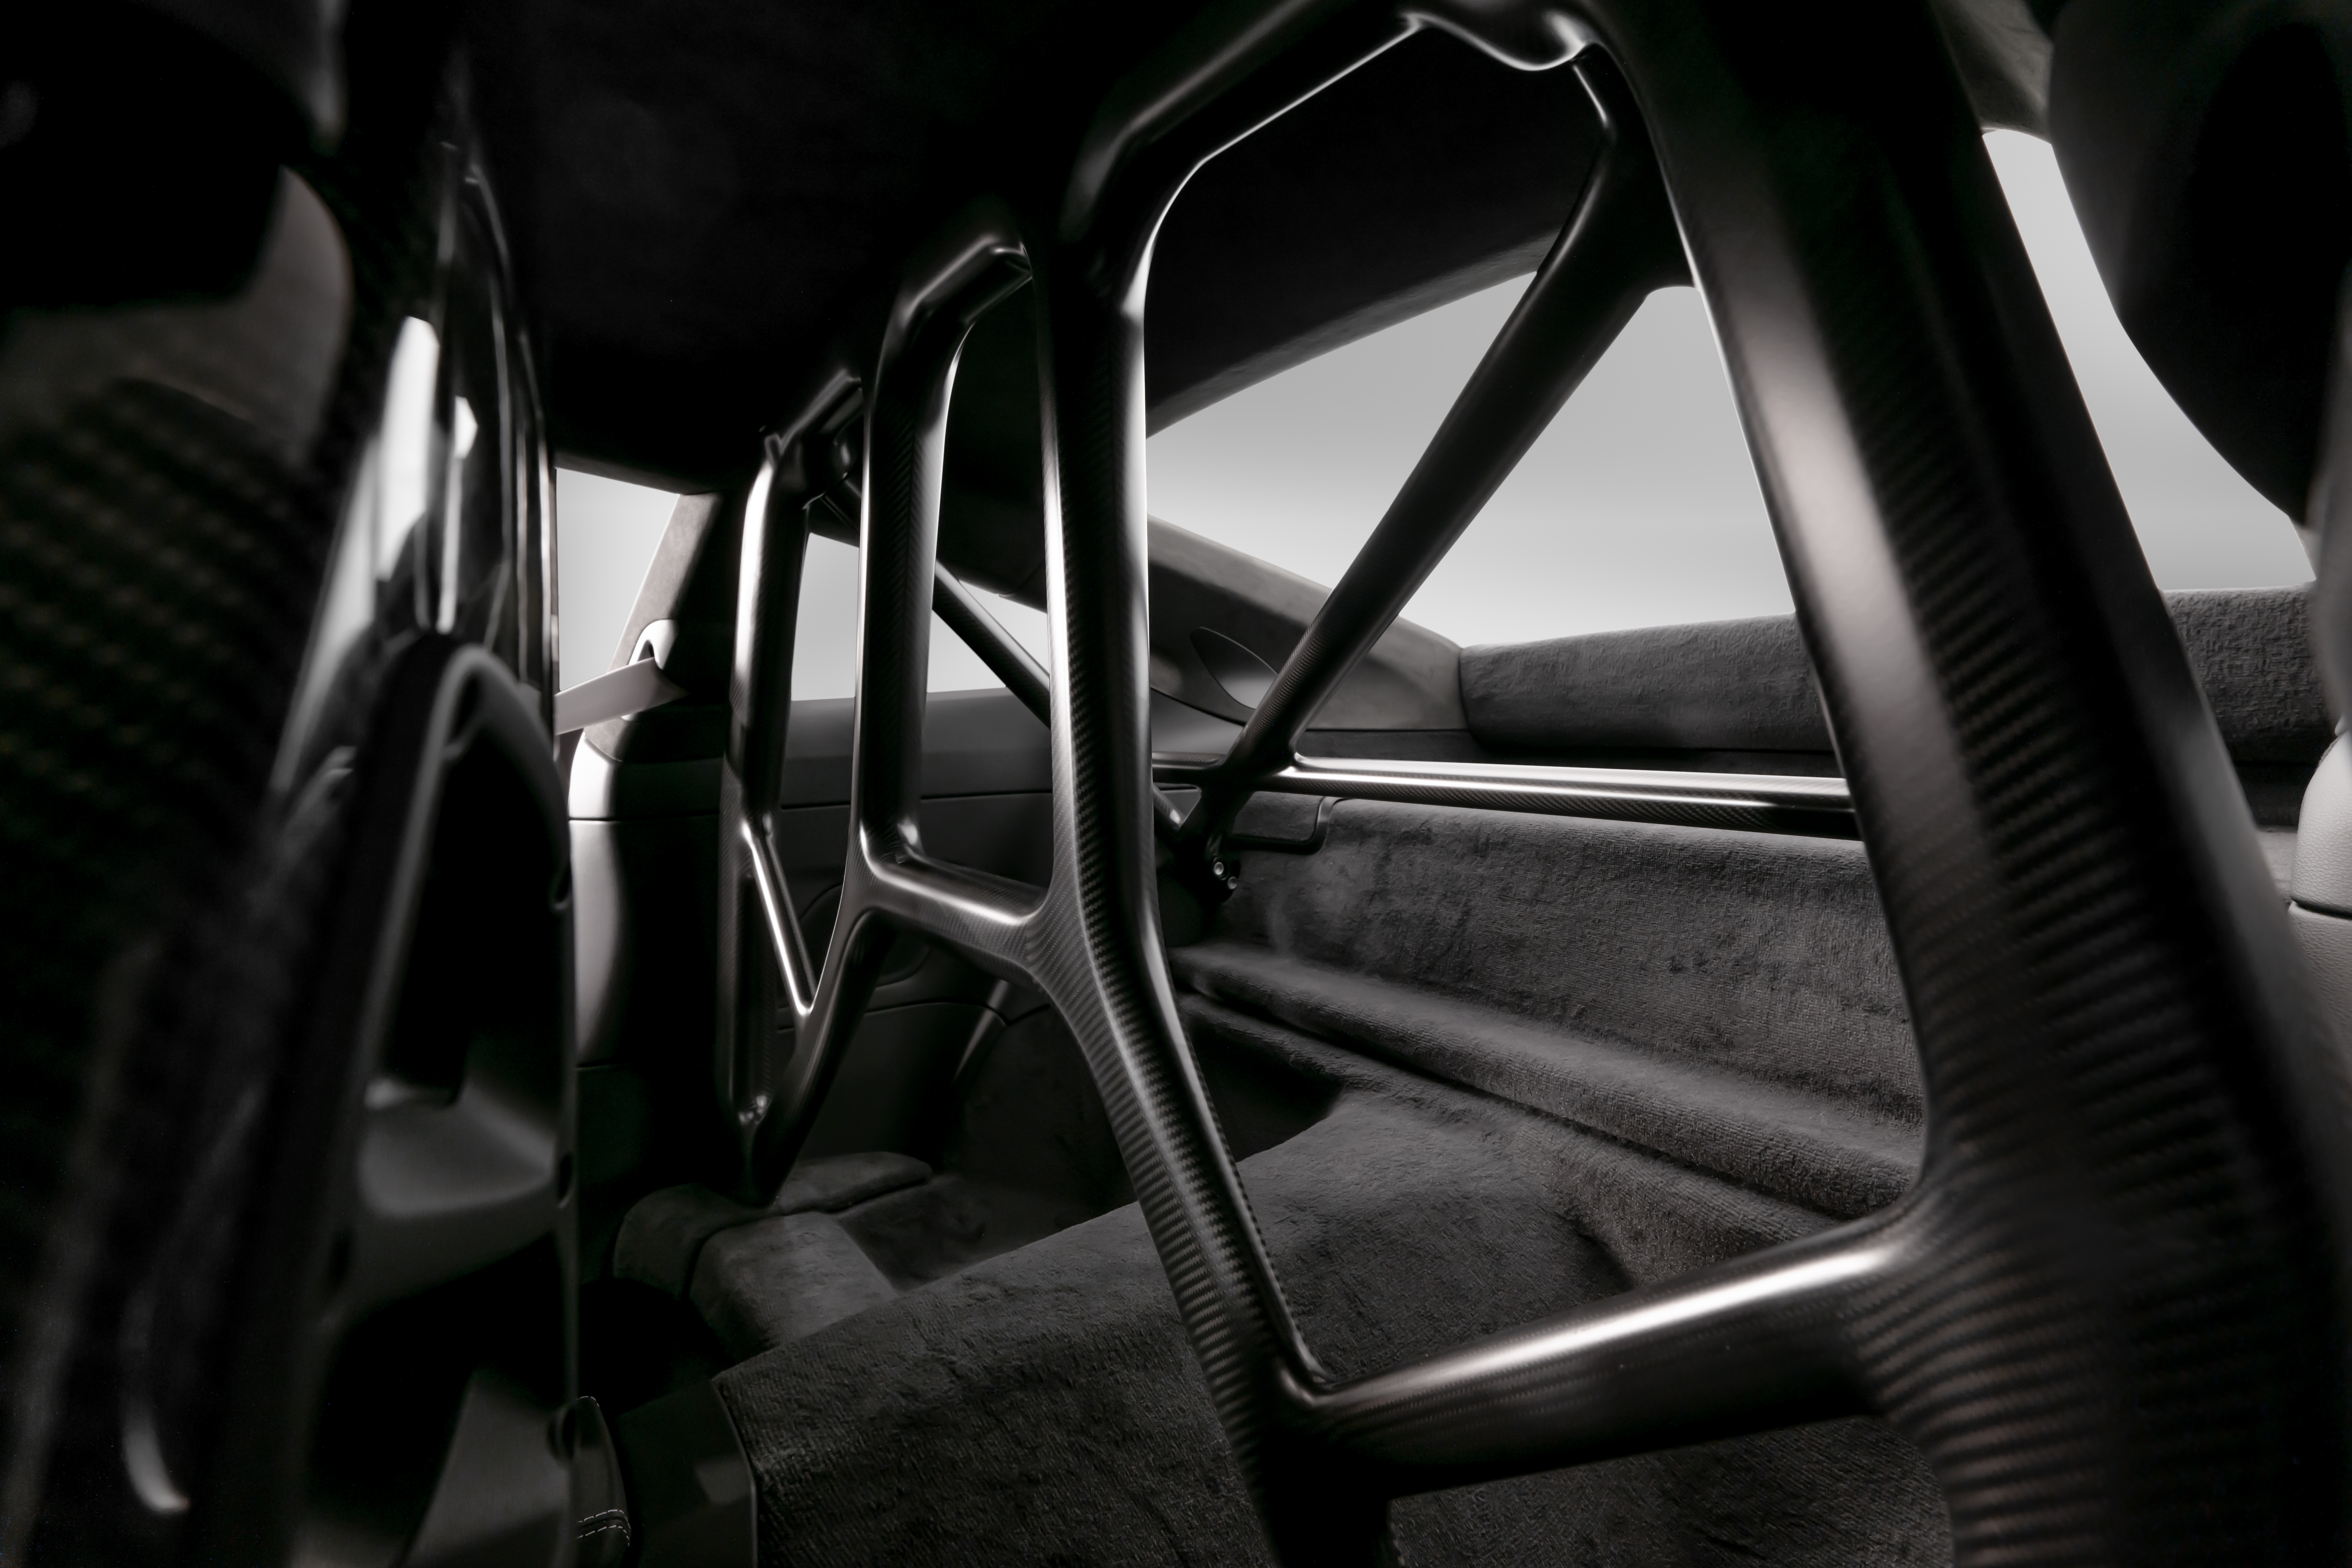 View of rear roll cage in Porsche 911 S/T interior